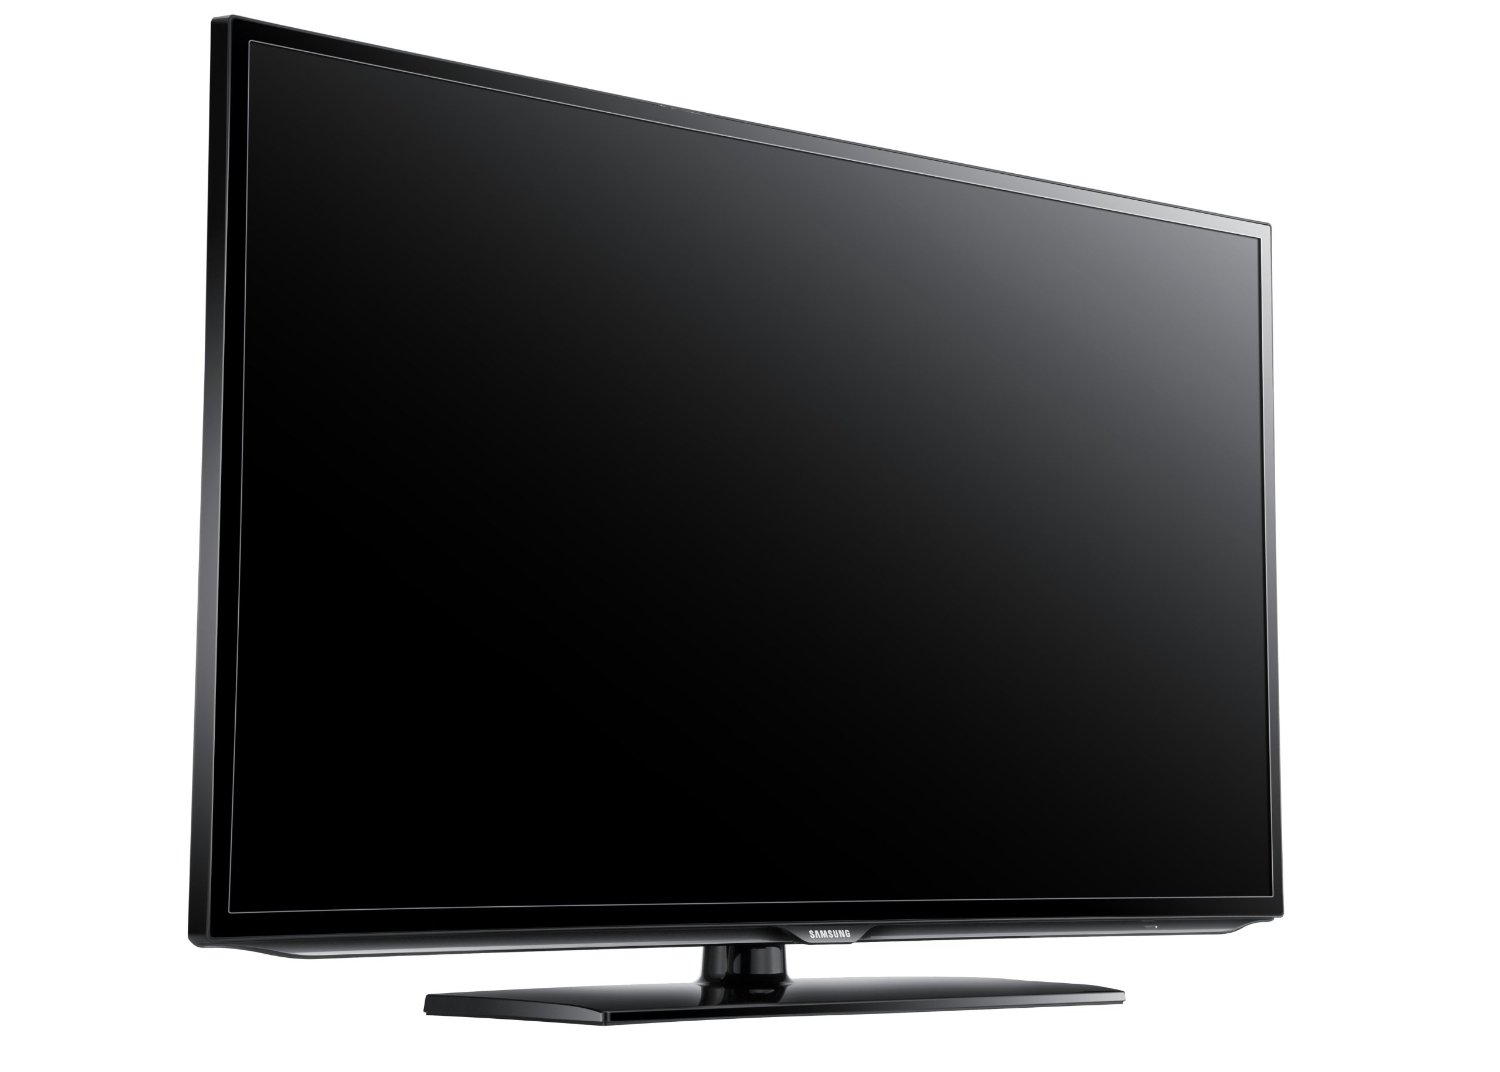 Samsung 32EH5000 FHD LED TV